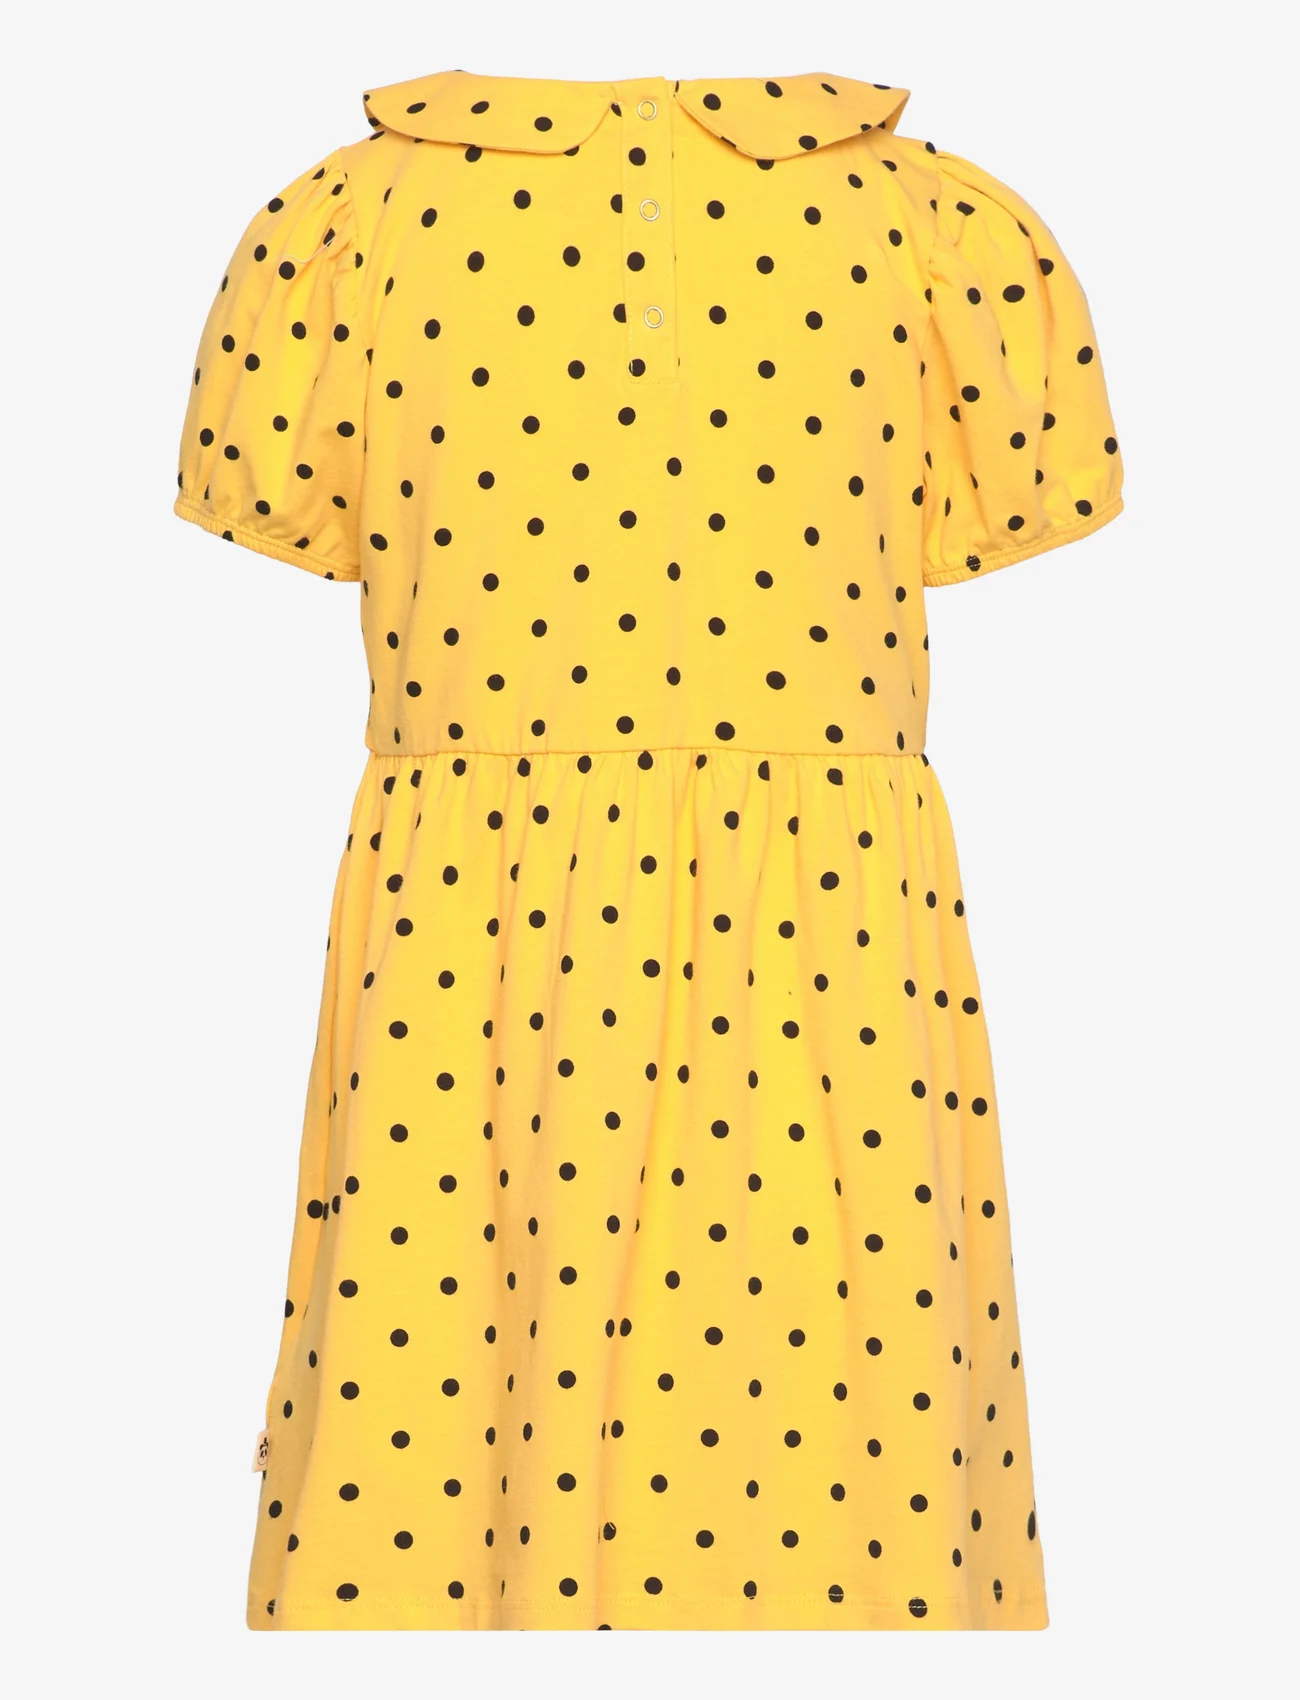 Mini Rodini - Polka dot aop ss dress - short-sleeved casual dresses - yellow - 1